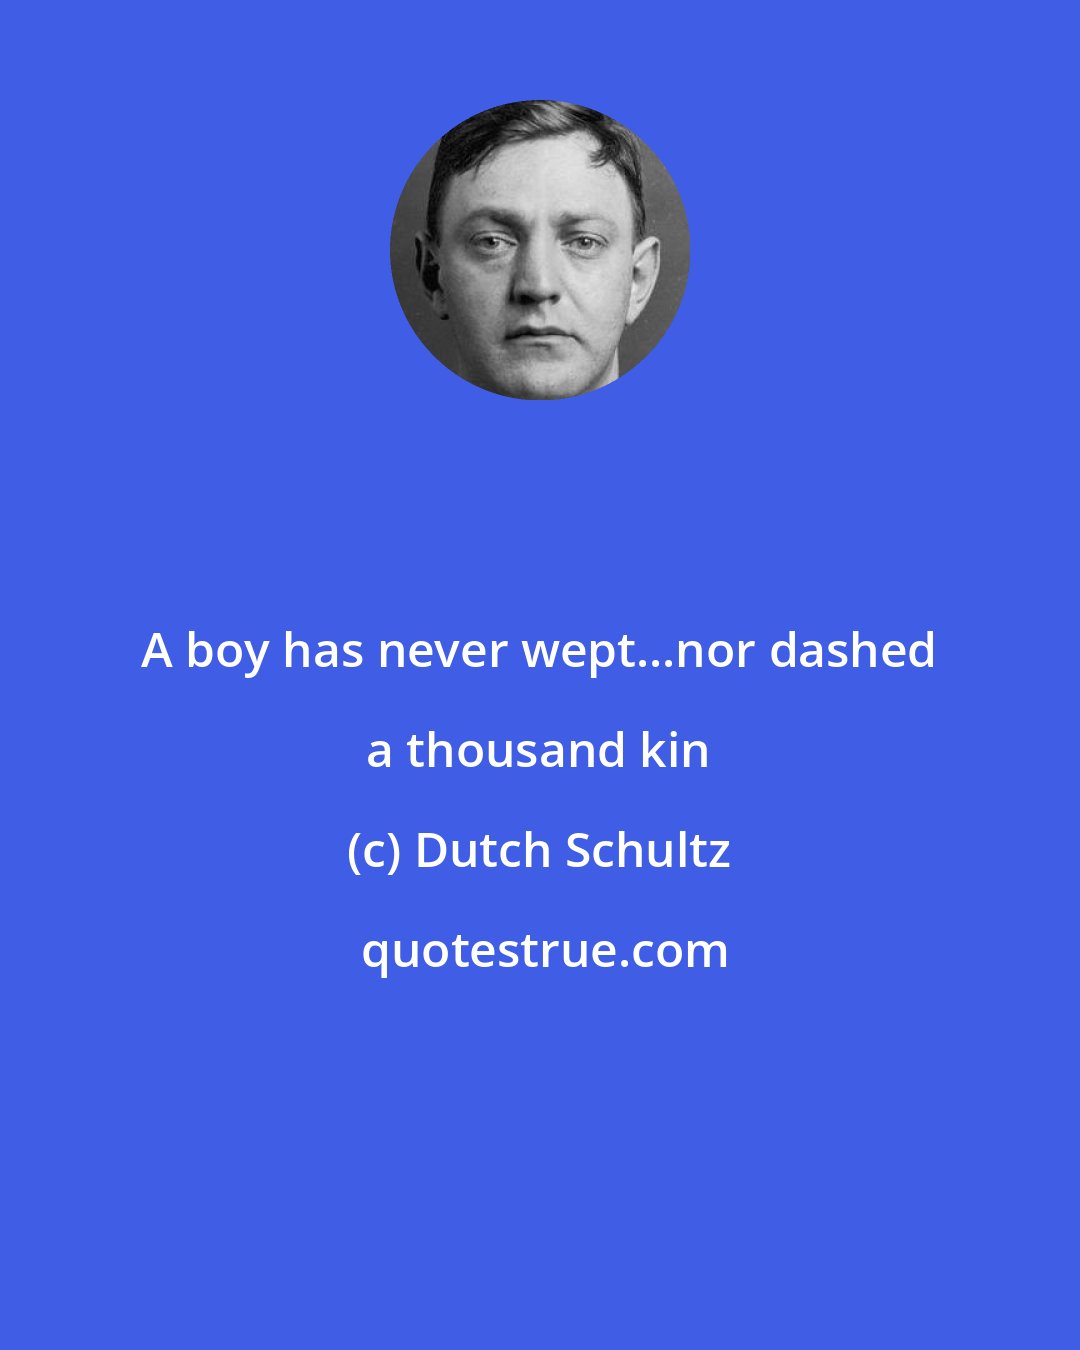 Dutch Schultz: A boy has never wept...nor dashed a thousand kin